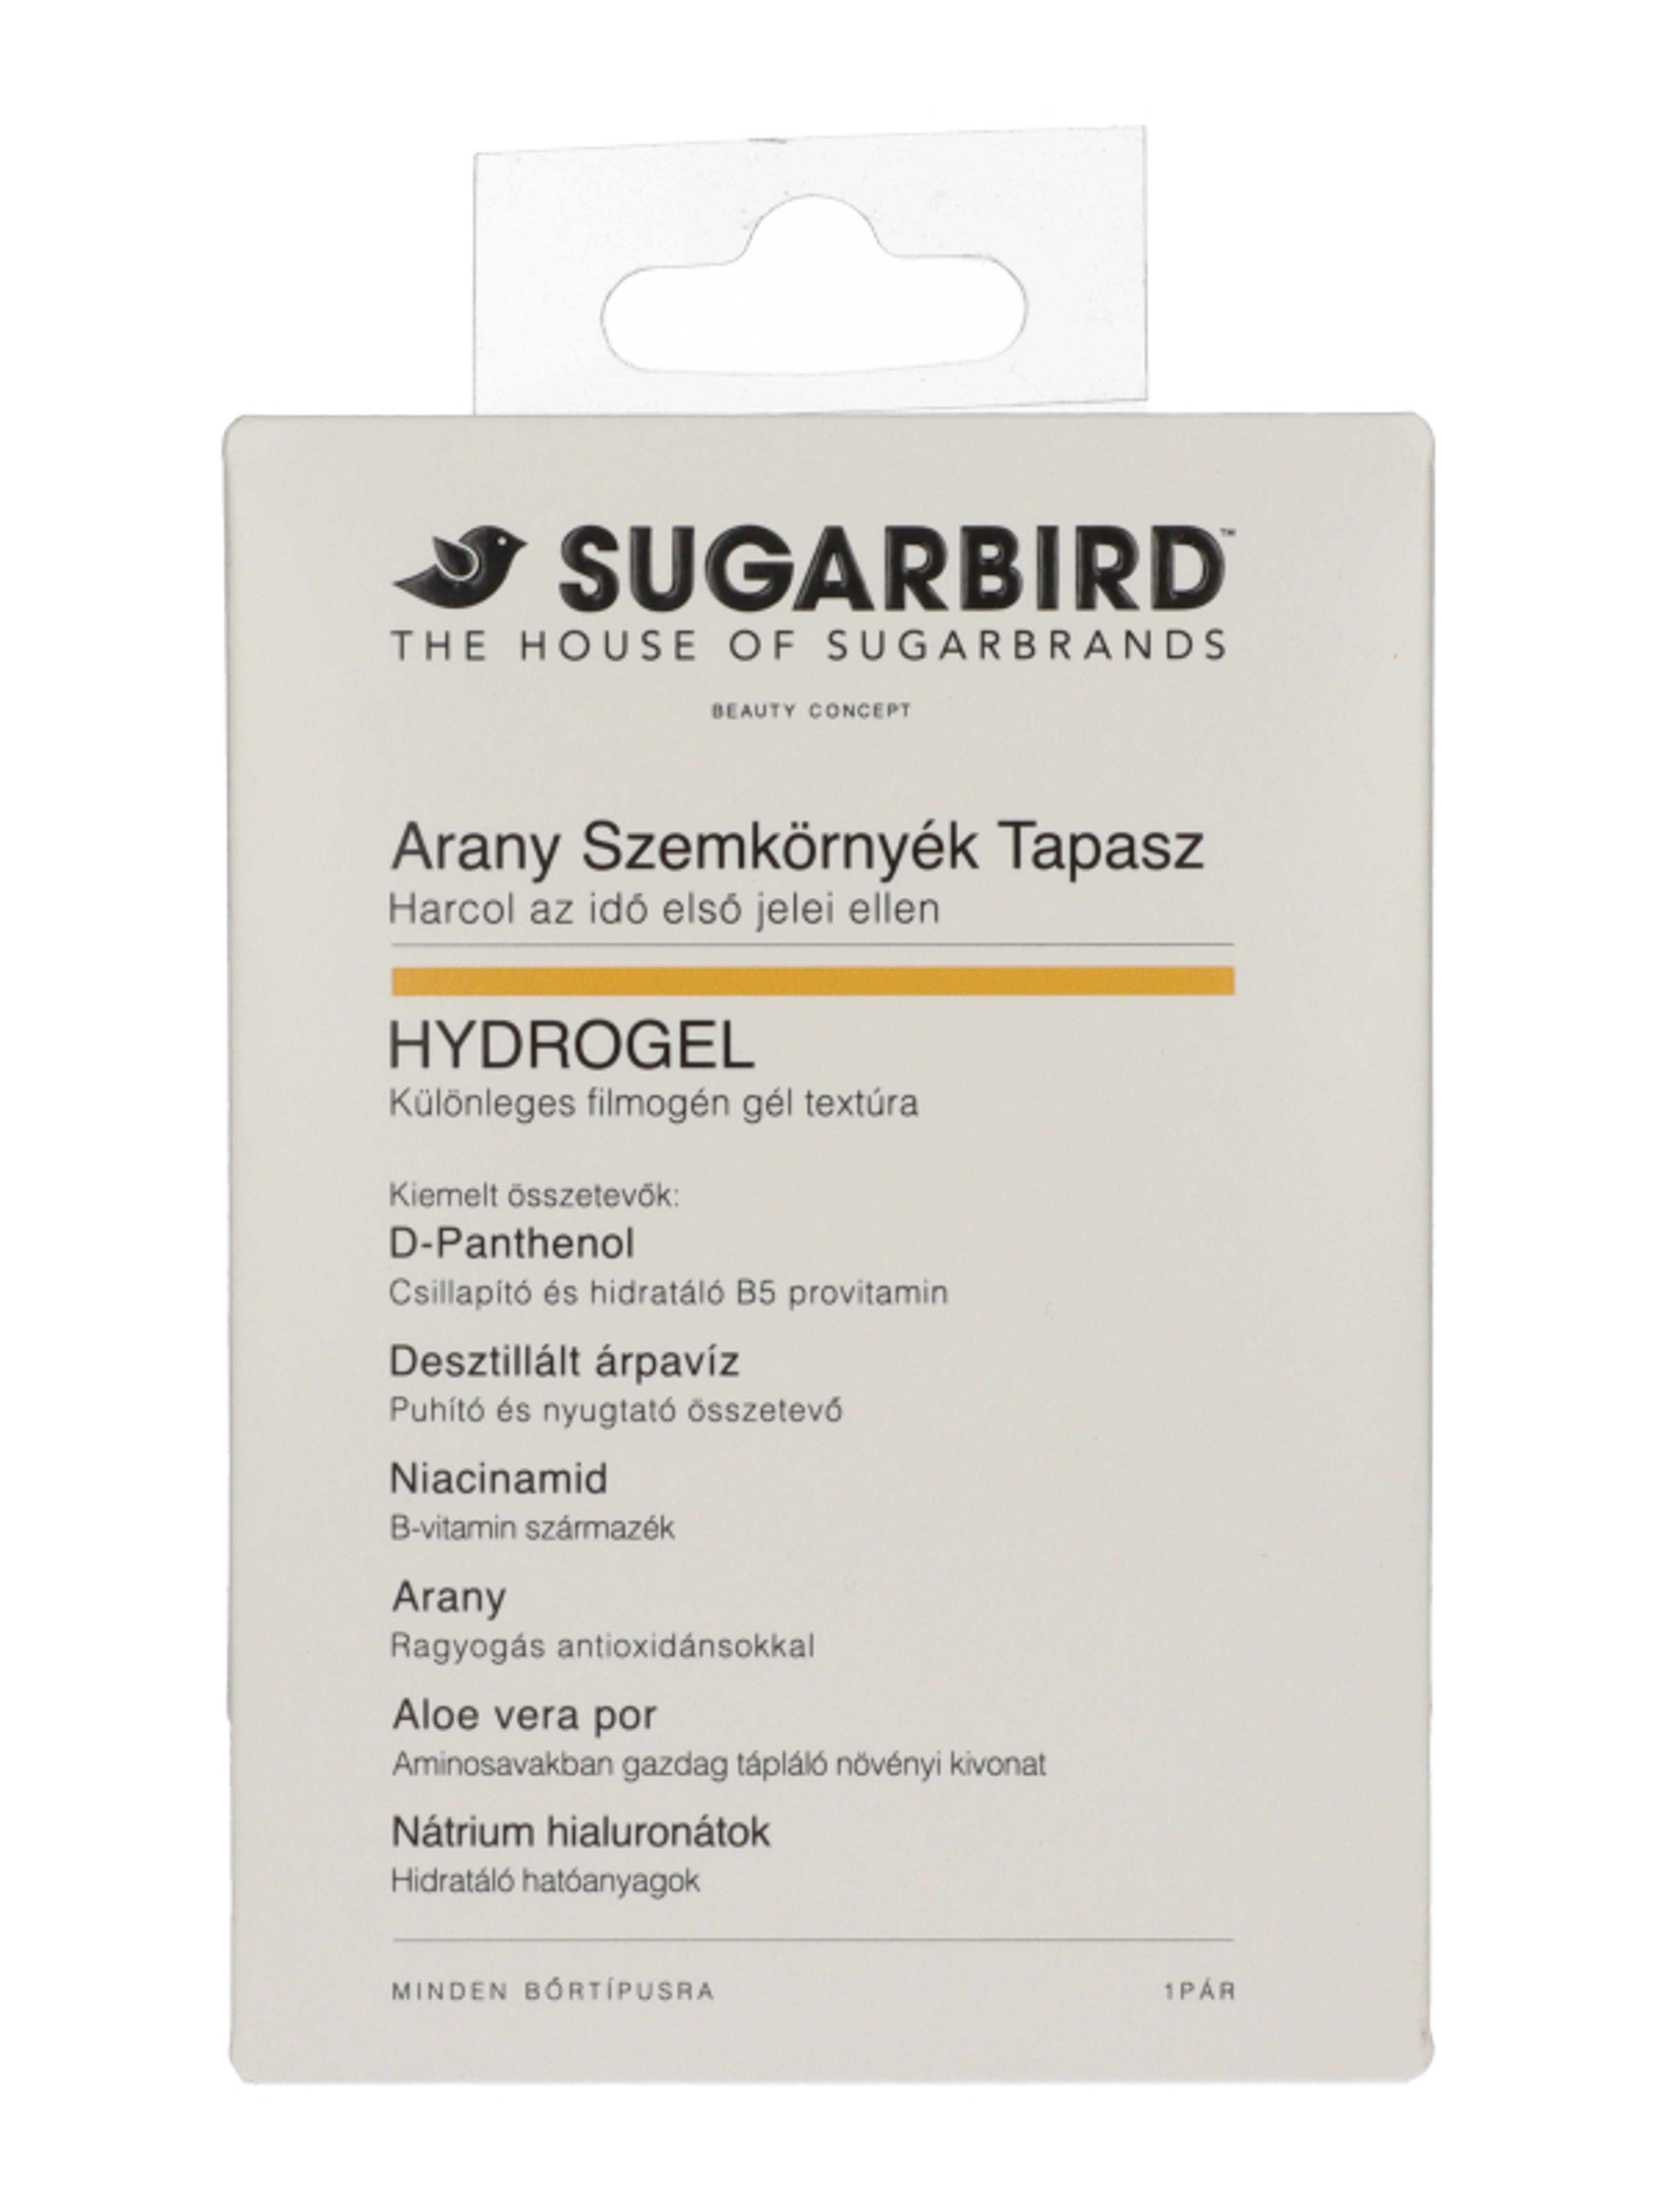 Sugarbird szemkörnyék tapasz /arany - 1 db